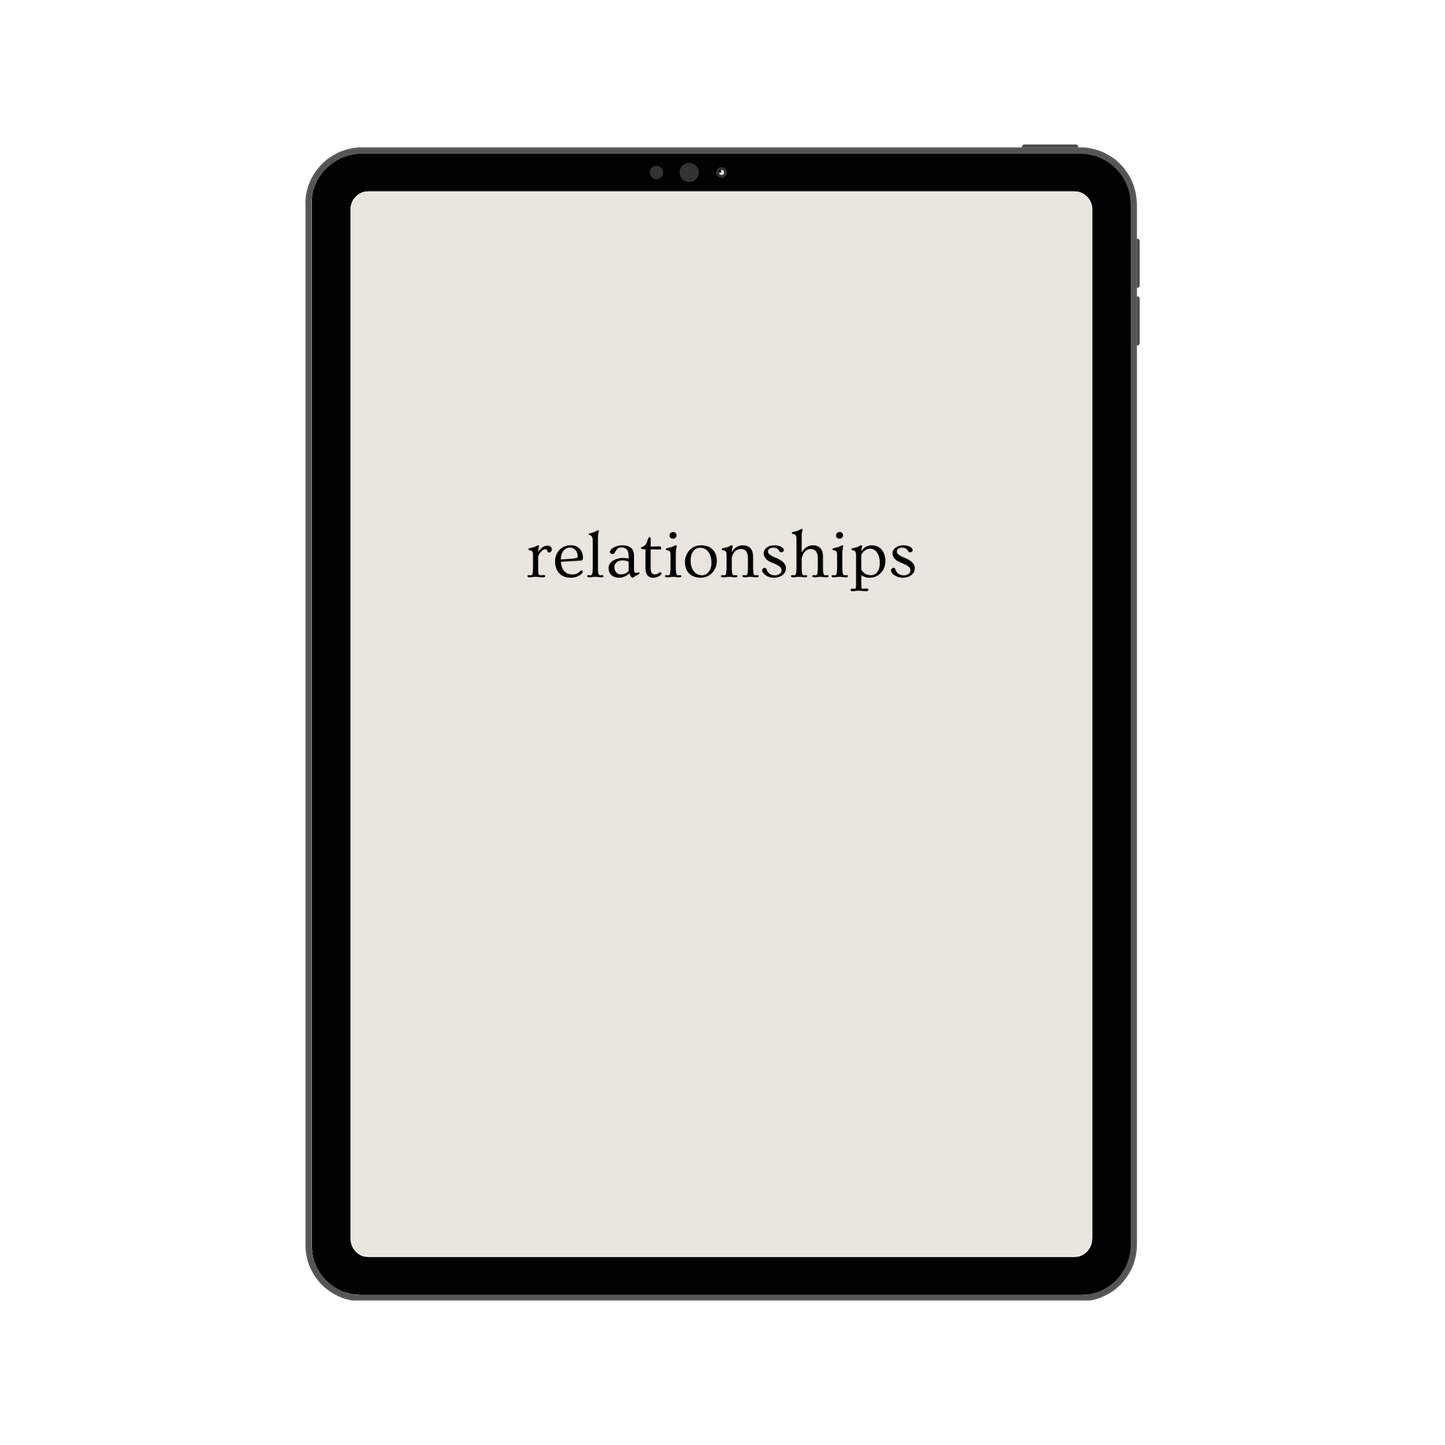 Relationship Journal